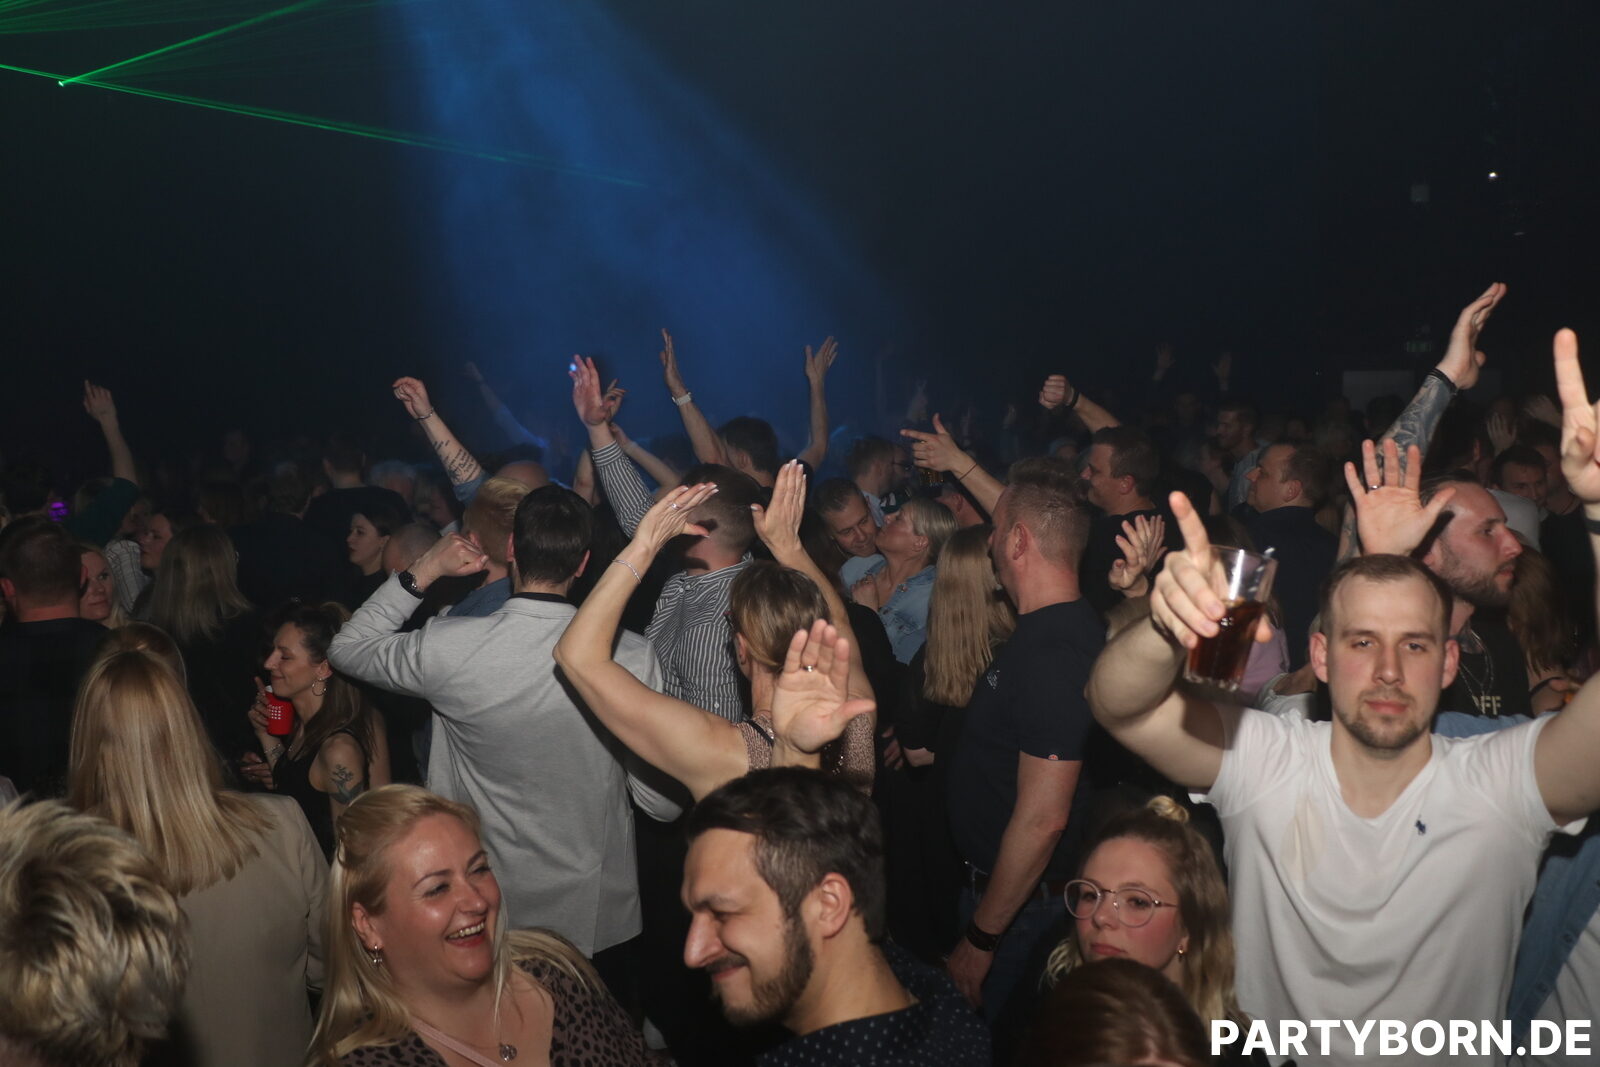 Suberg's ü30 Party - Paderborn, PaderHalle, 25.03.2023